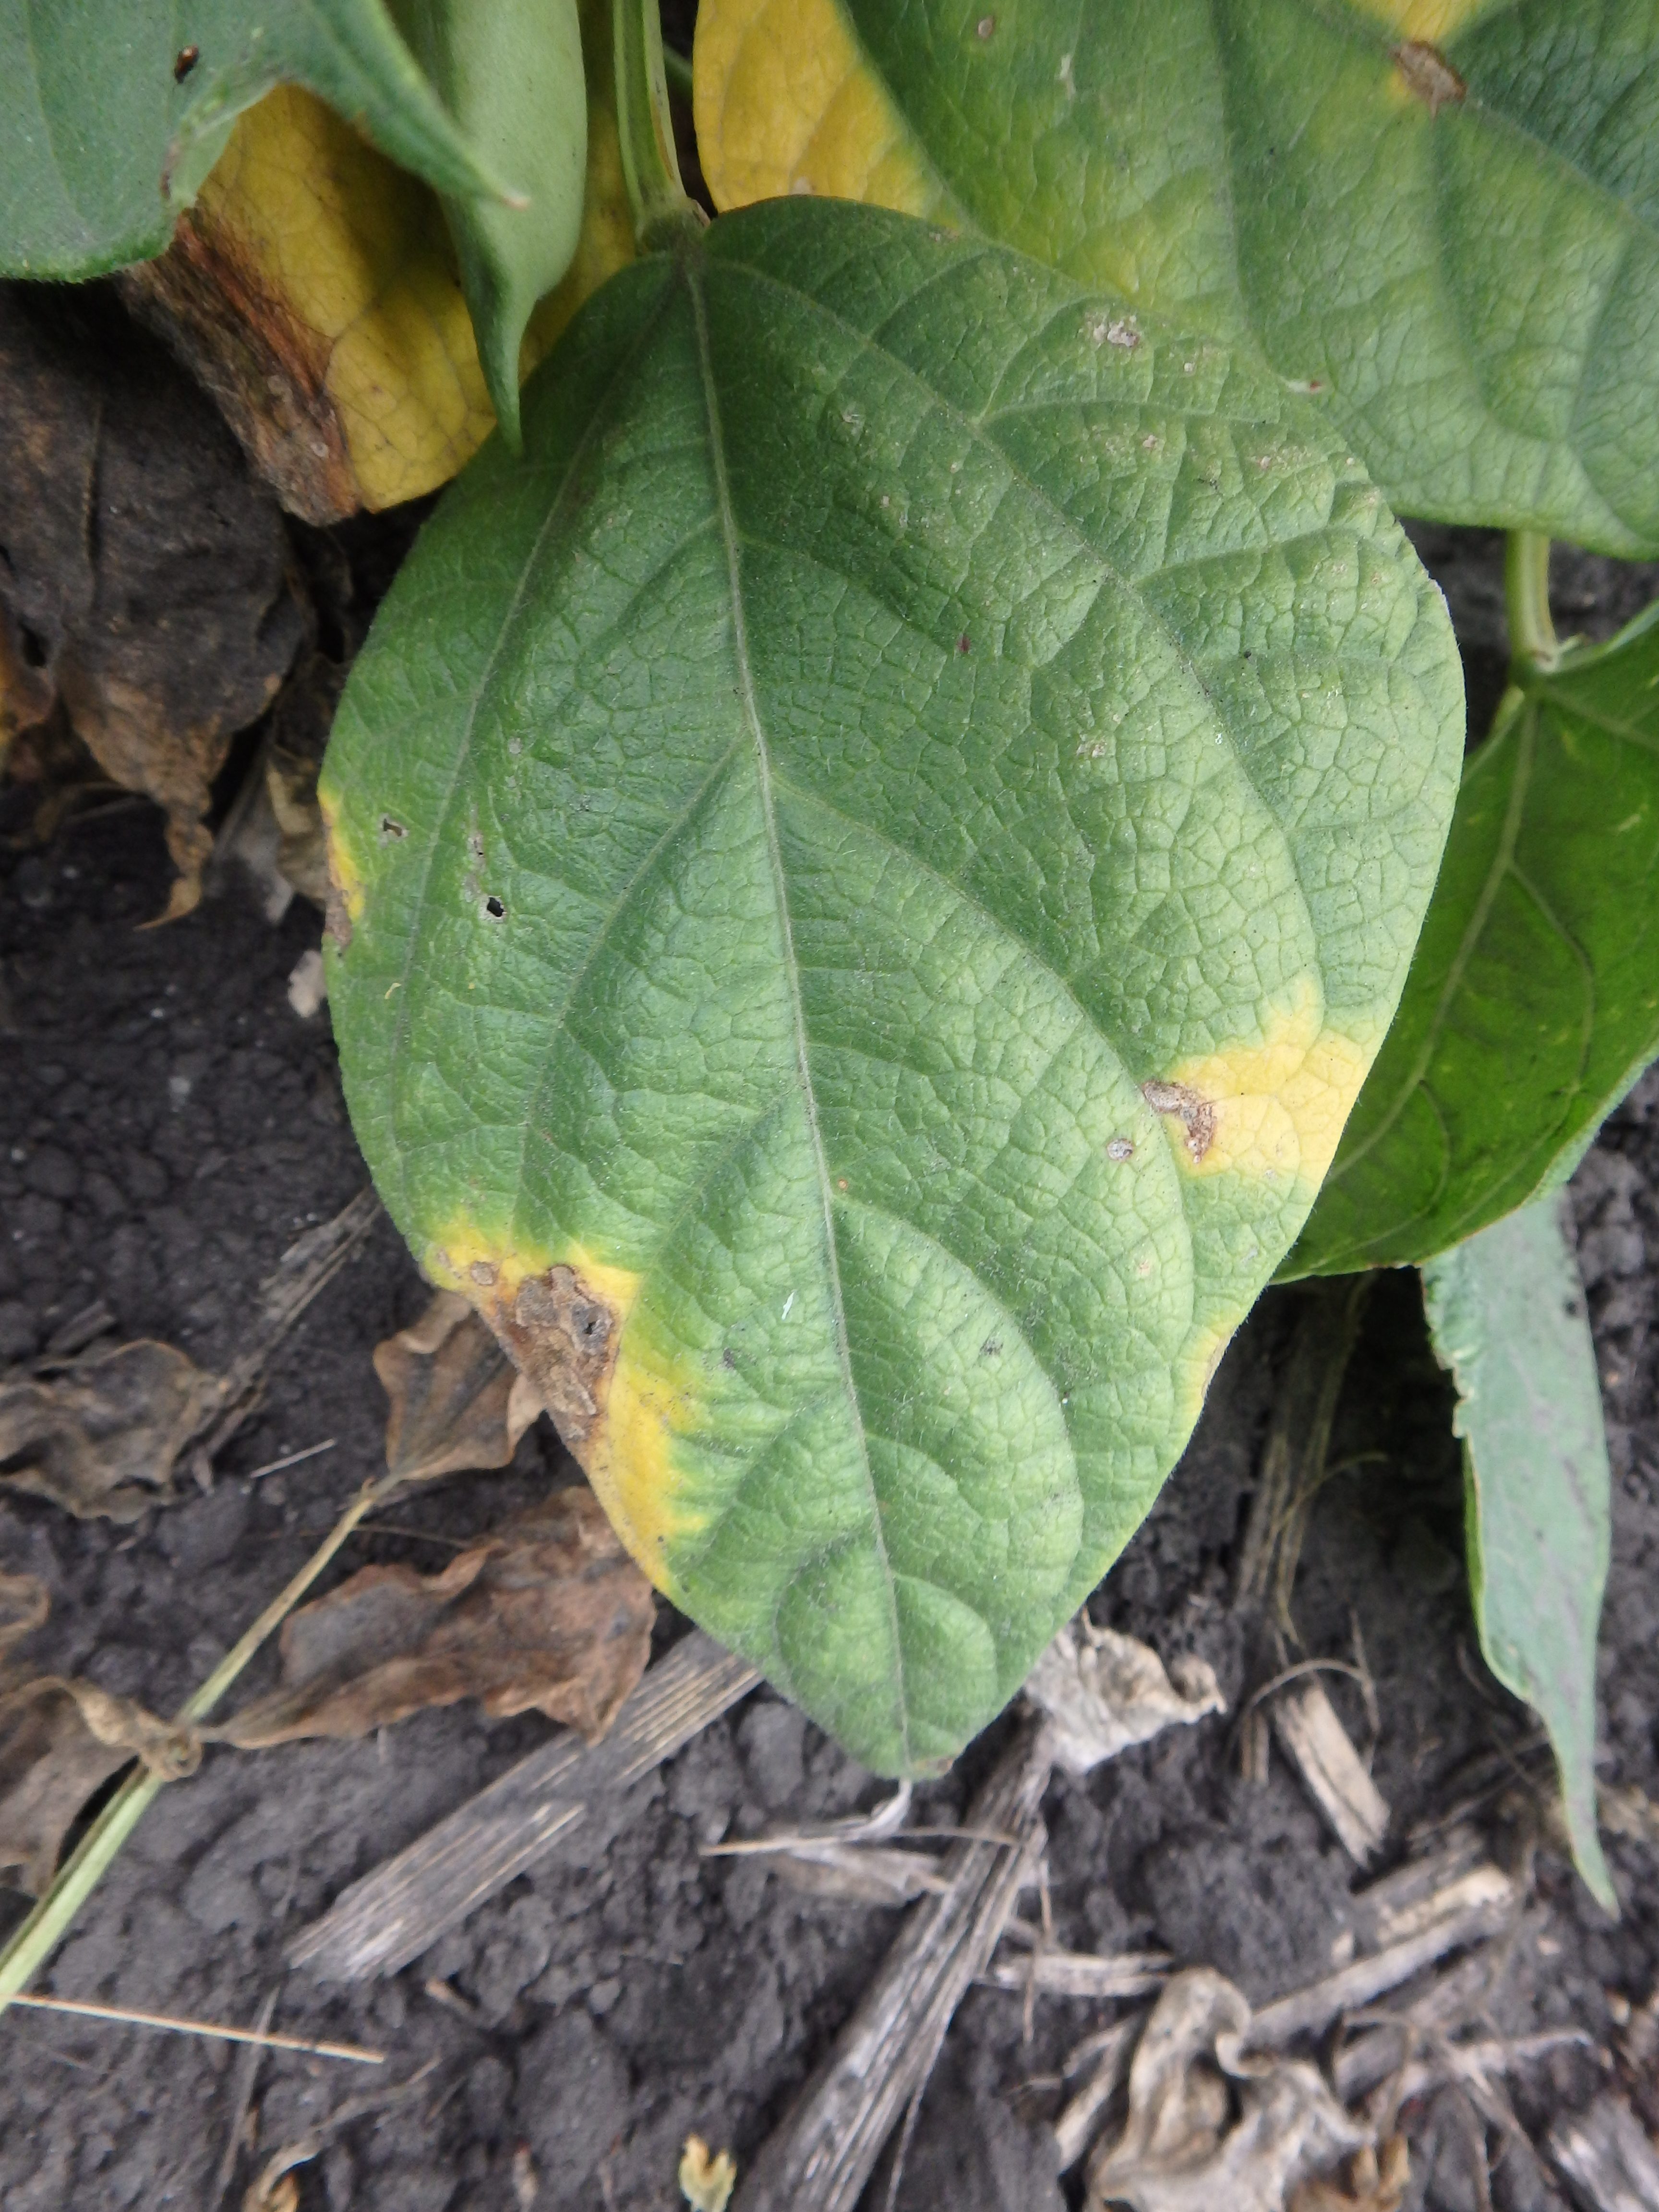 Dry Bean Foliar Diseases Manitoba Pulse Soybean Growers